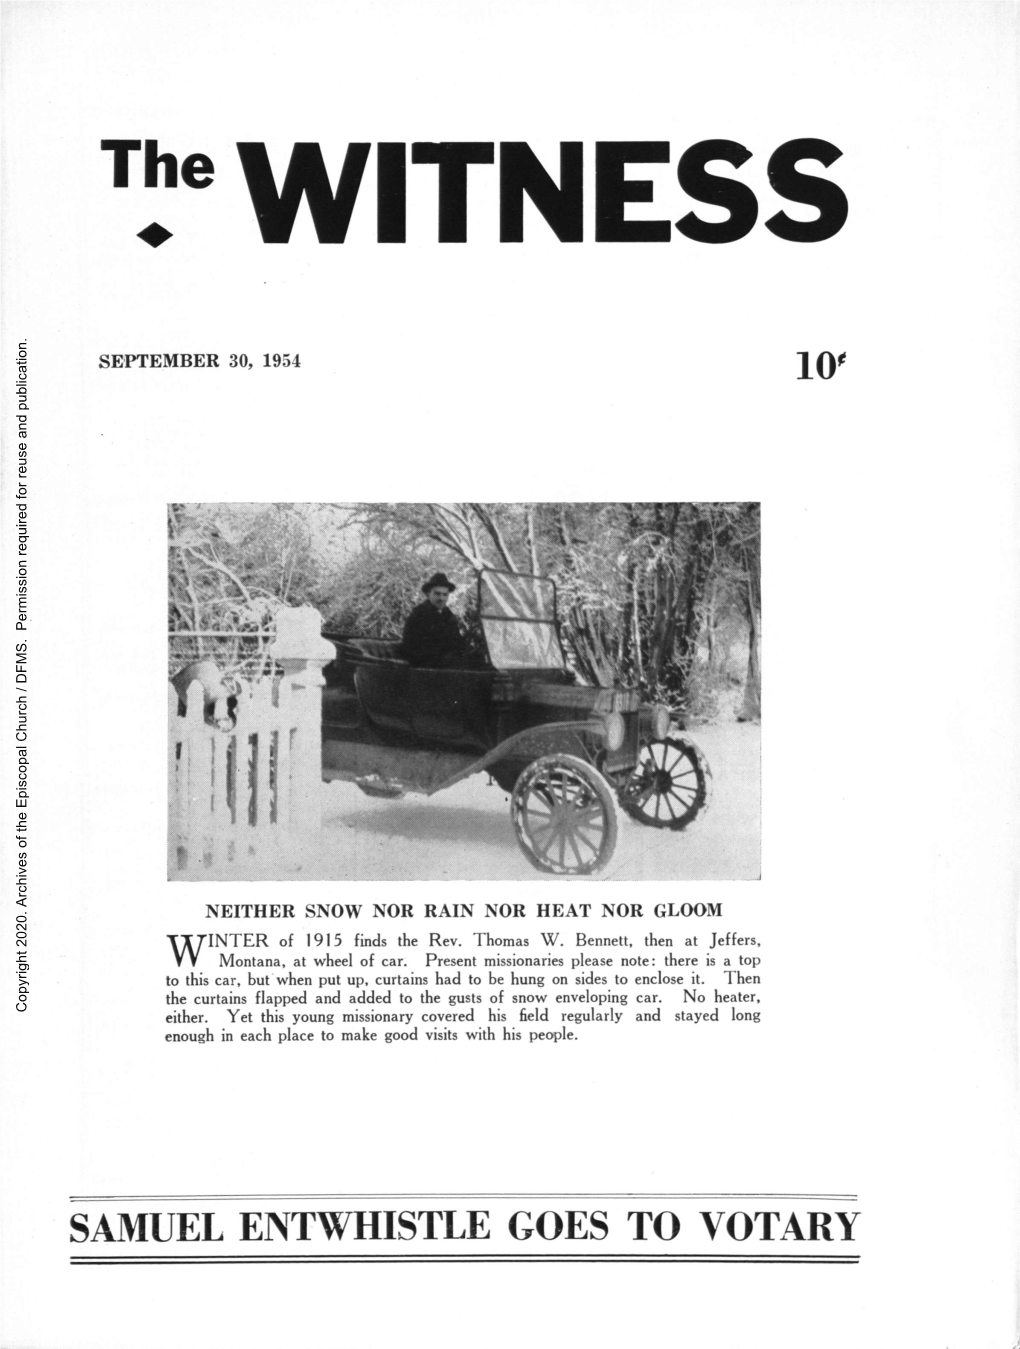 1954 the Witness, Vol. 41, No. 45. September 30, 1954